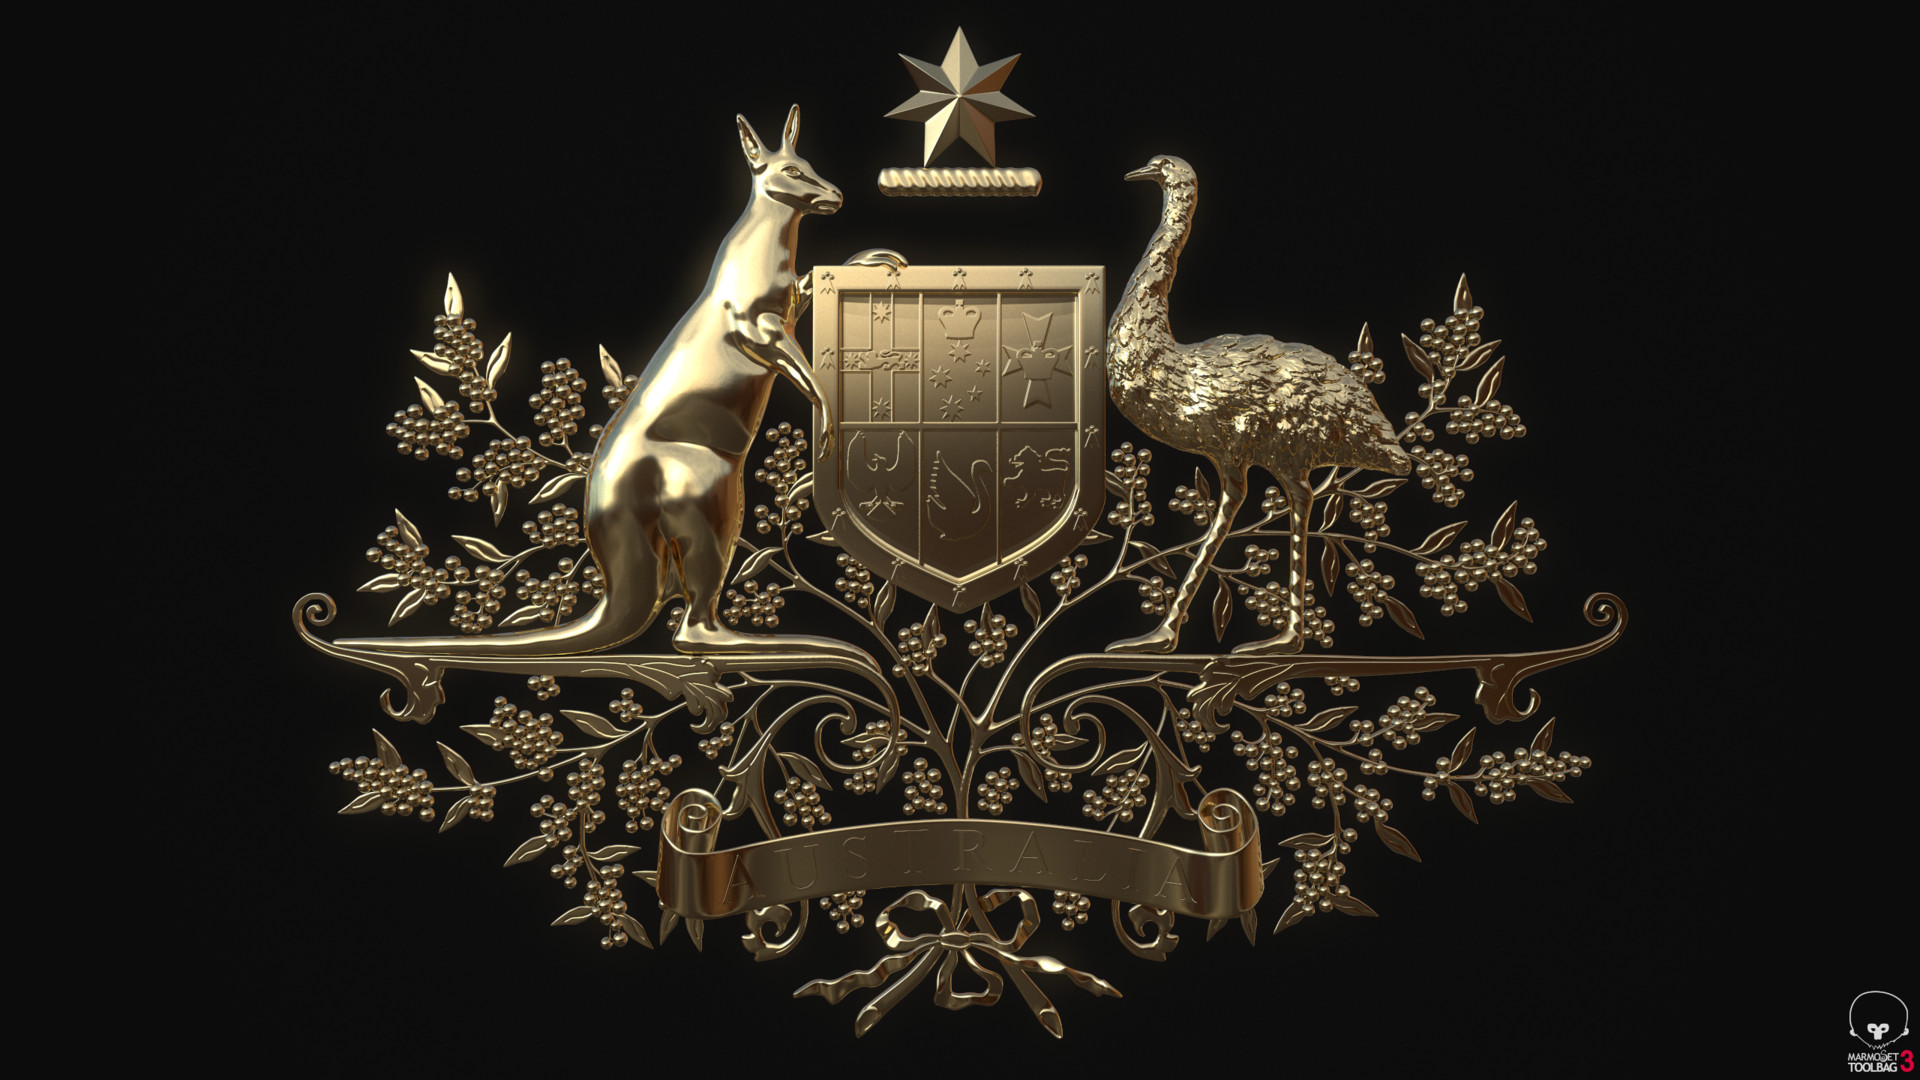 Australian Coat Of Arms